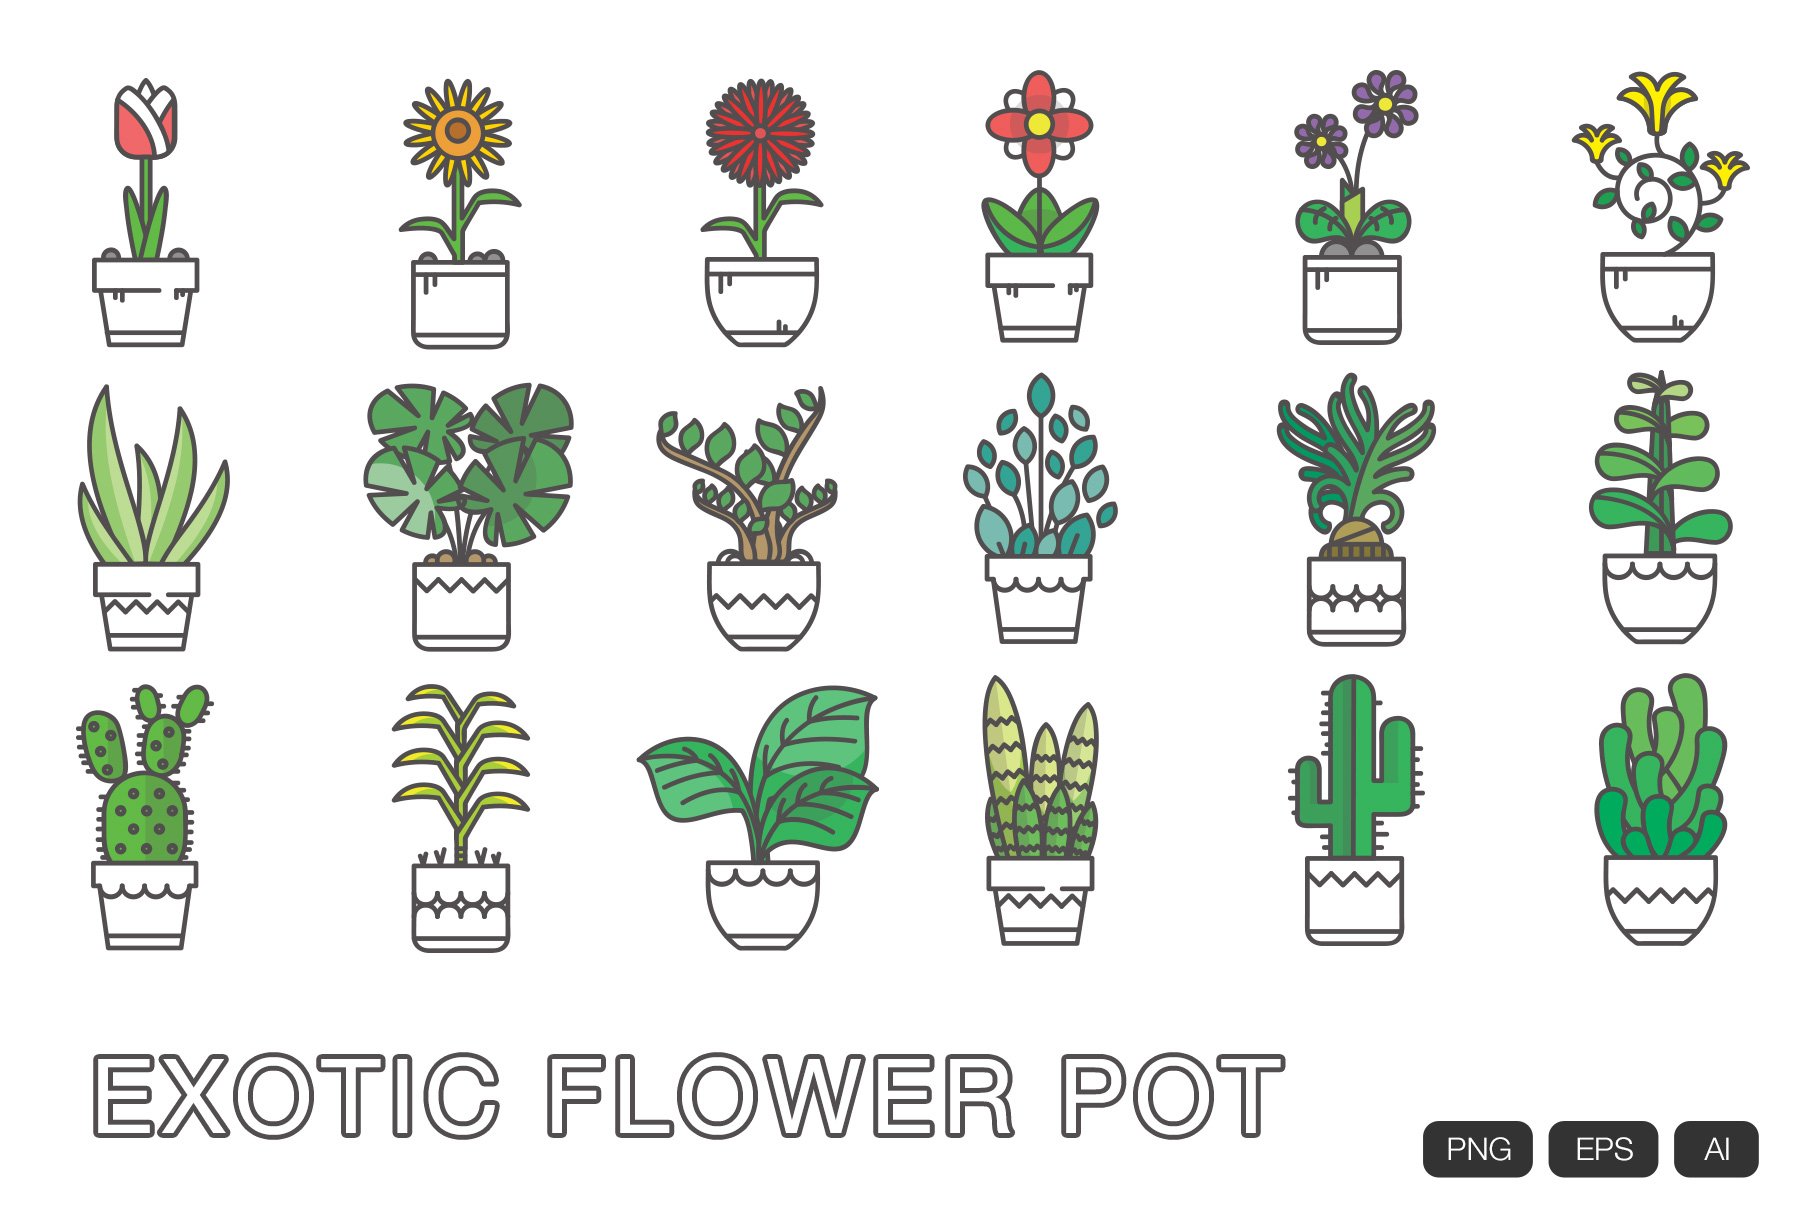 18 Flower Pot cover image.